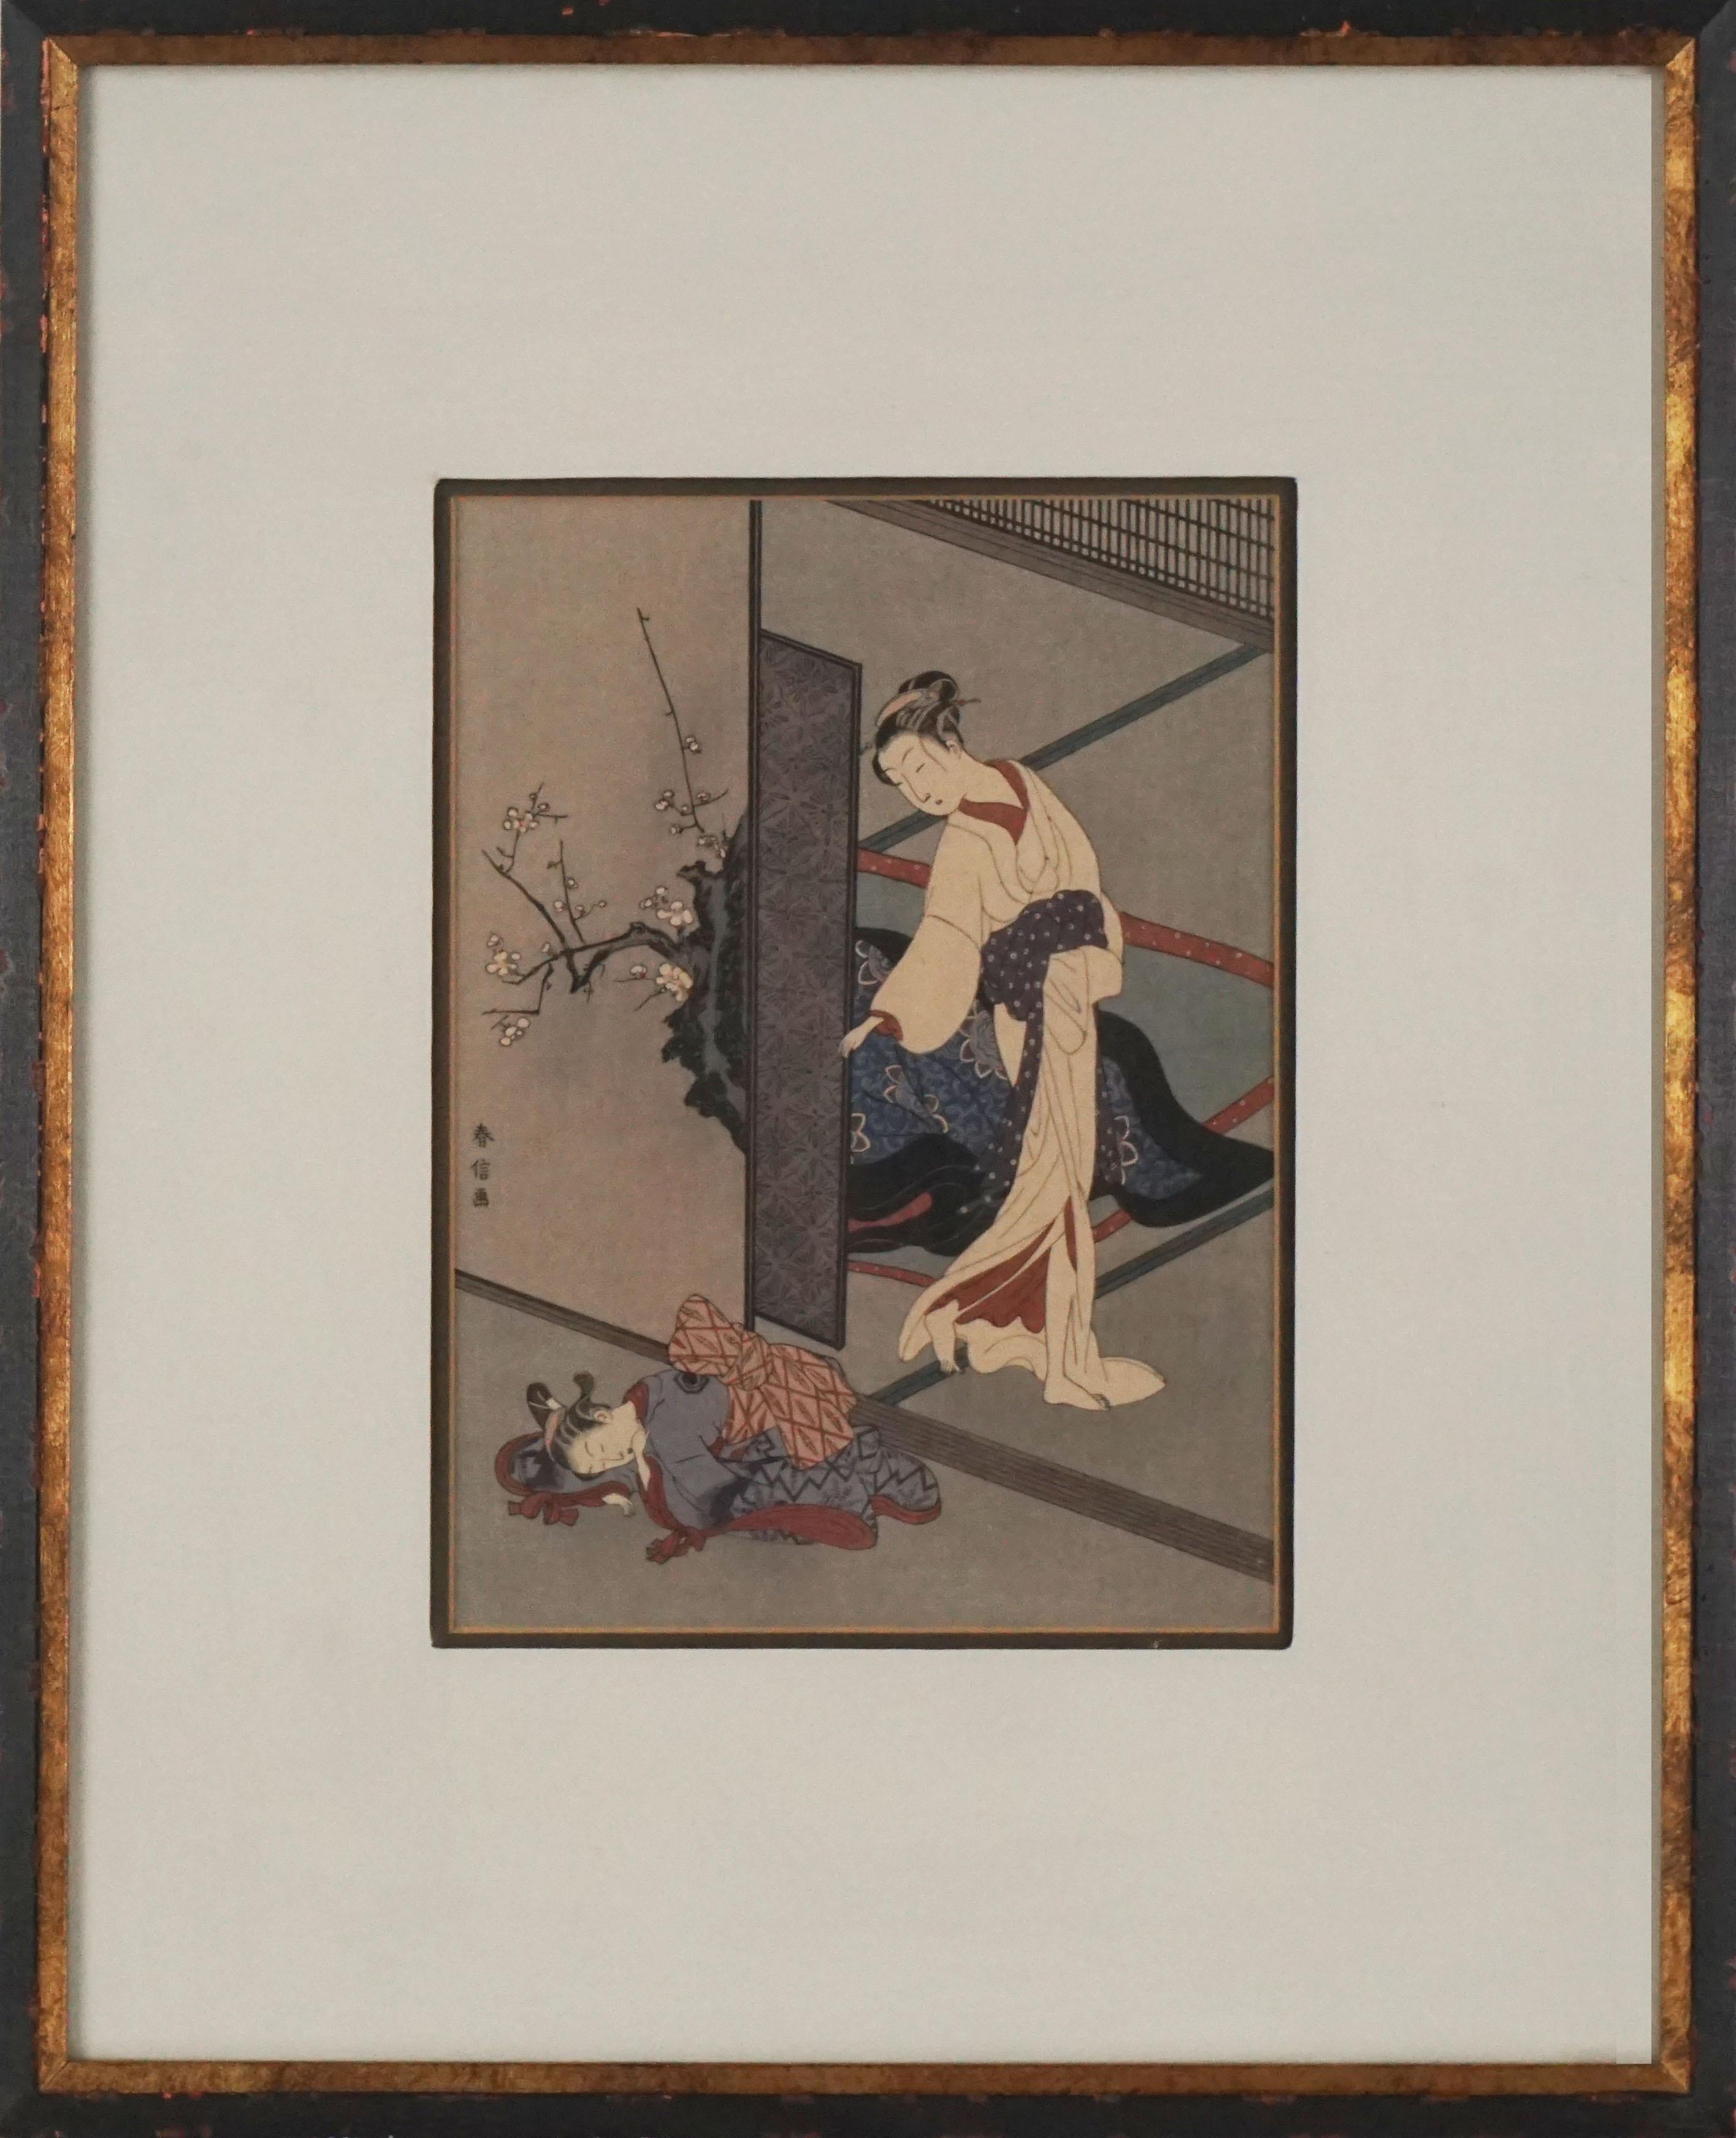 Early 20th Century Japanese Woodblock -- Woman Looking At Her Sleeping Kamuro - Print by Suzuki (Hozumi) Harunobu